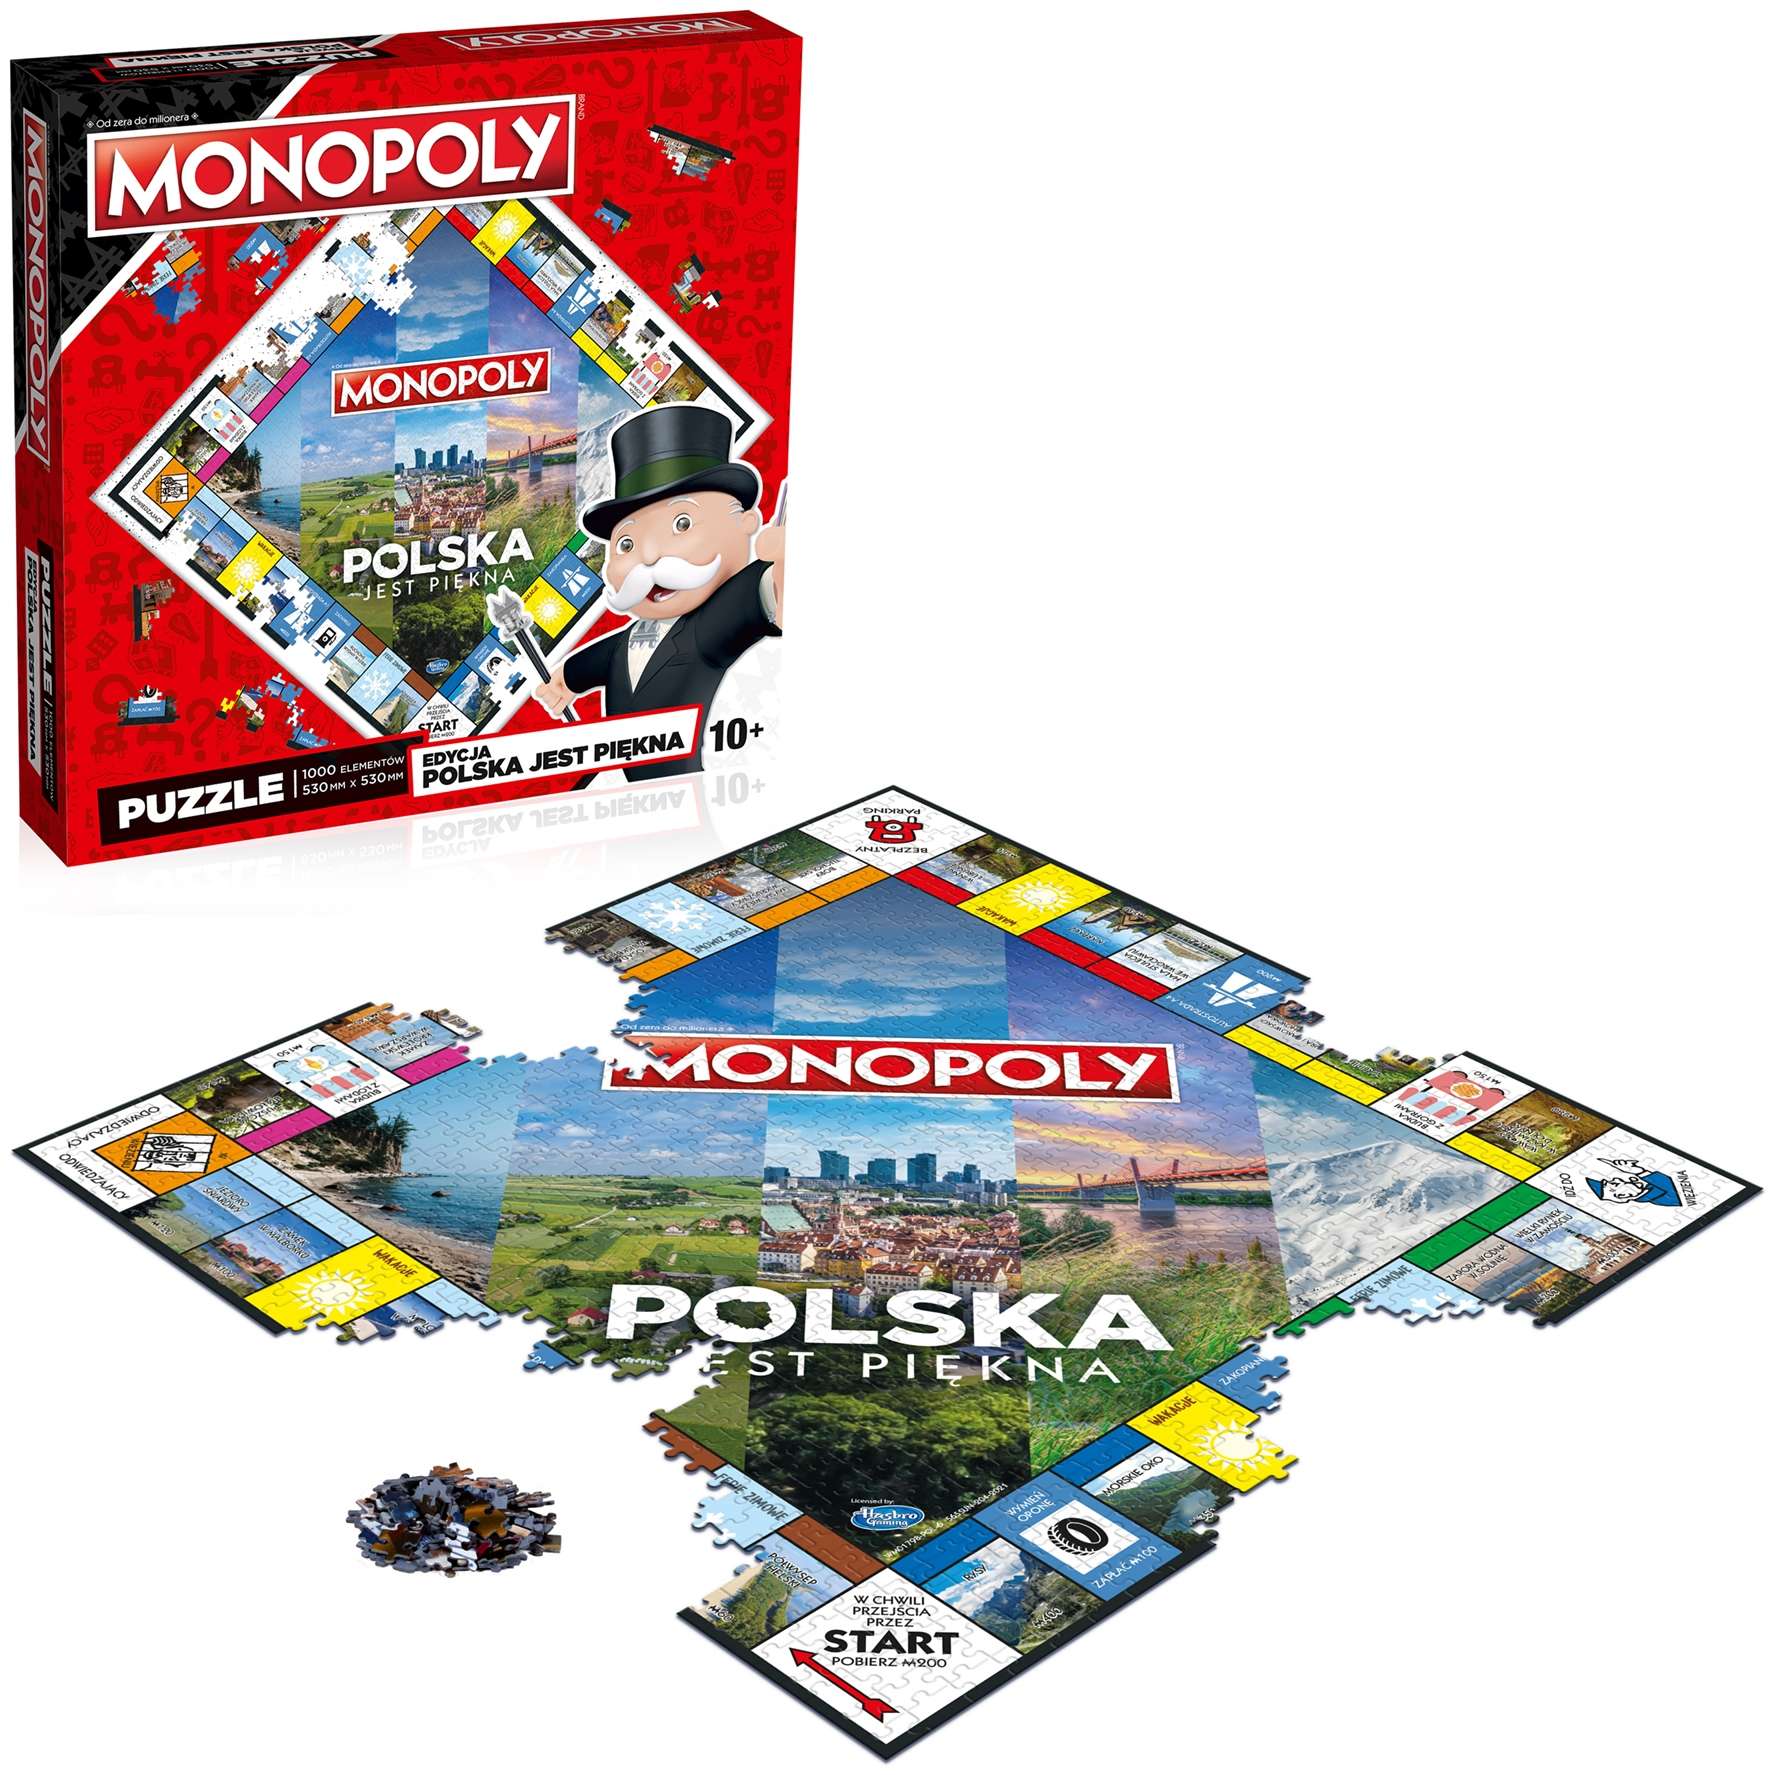 Puzzle Monopoly Polska jest pikna plansza 1000 elementw Winning Moves